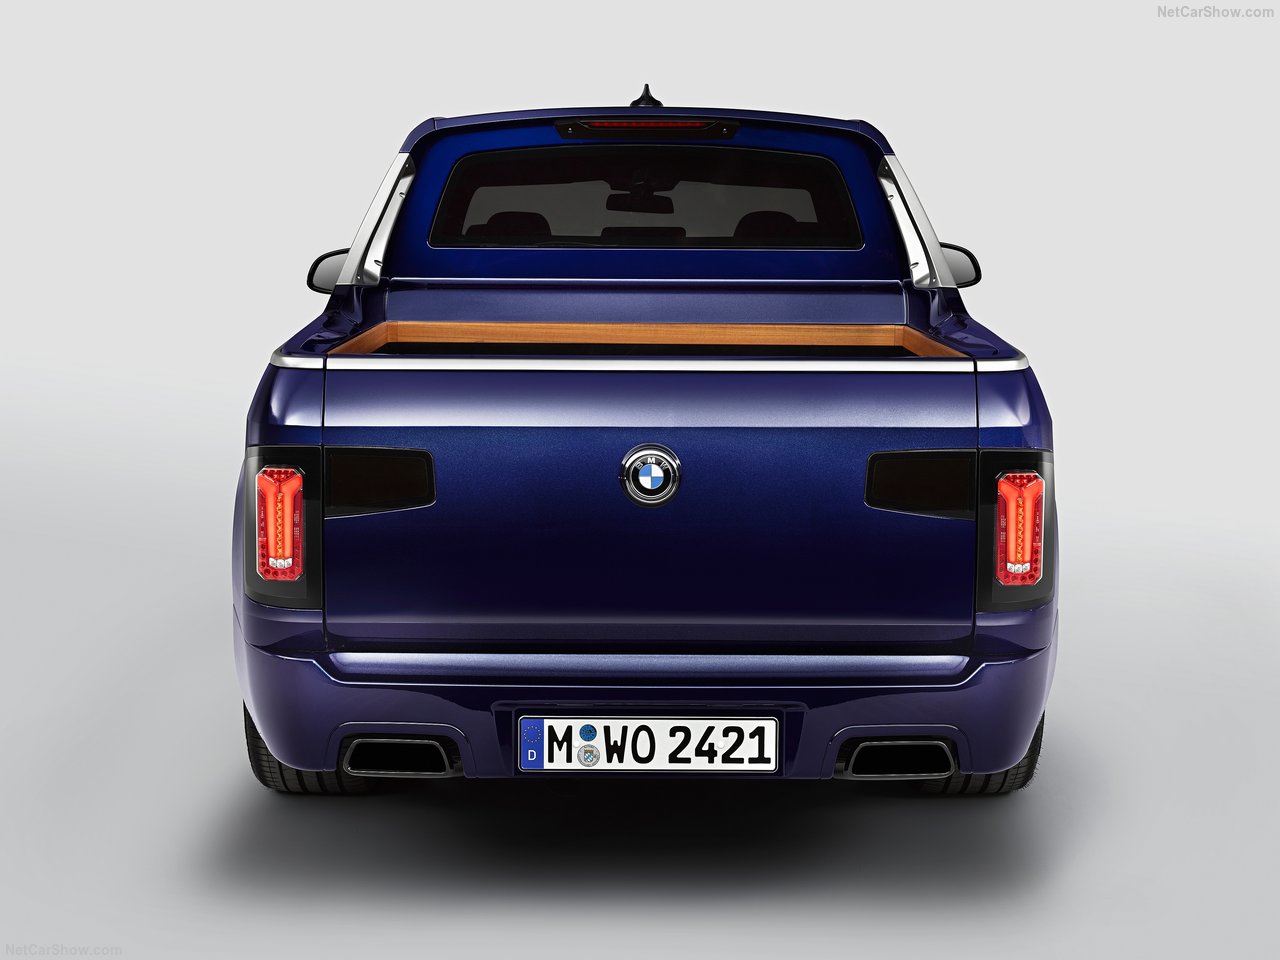 BMW’dan X7 Pick-up! BMW X7 Pick-up’ın özellikleri neler?